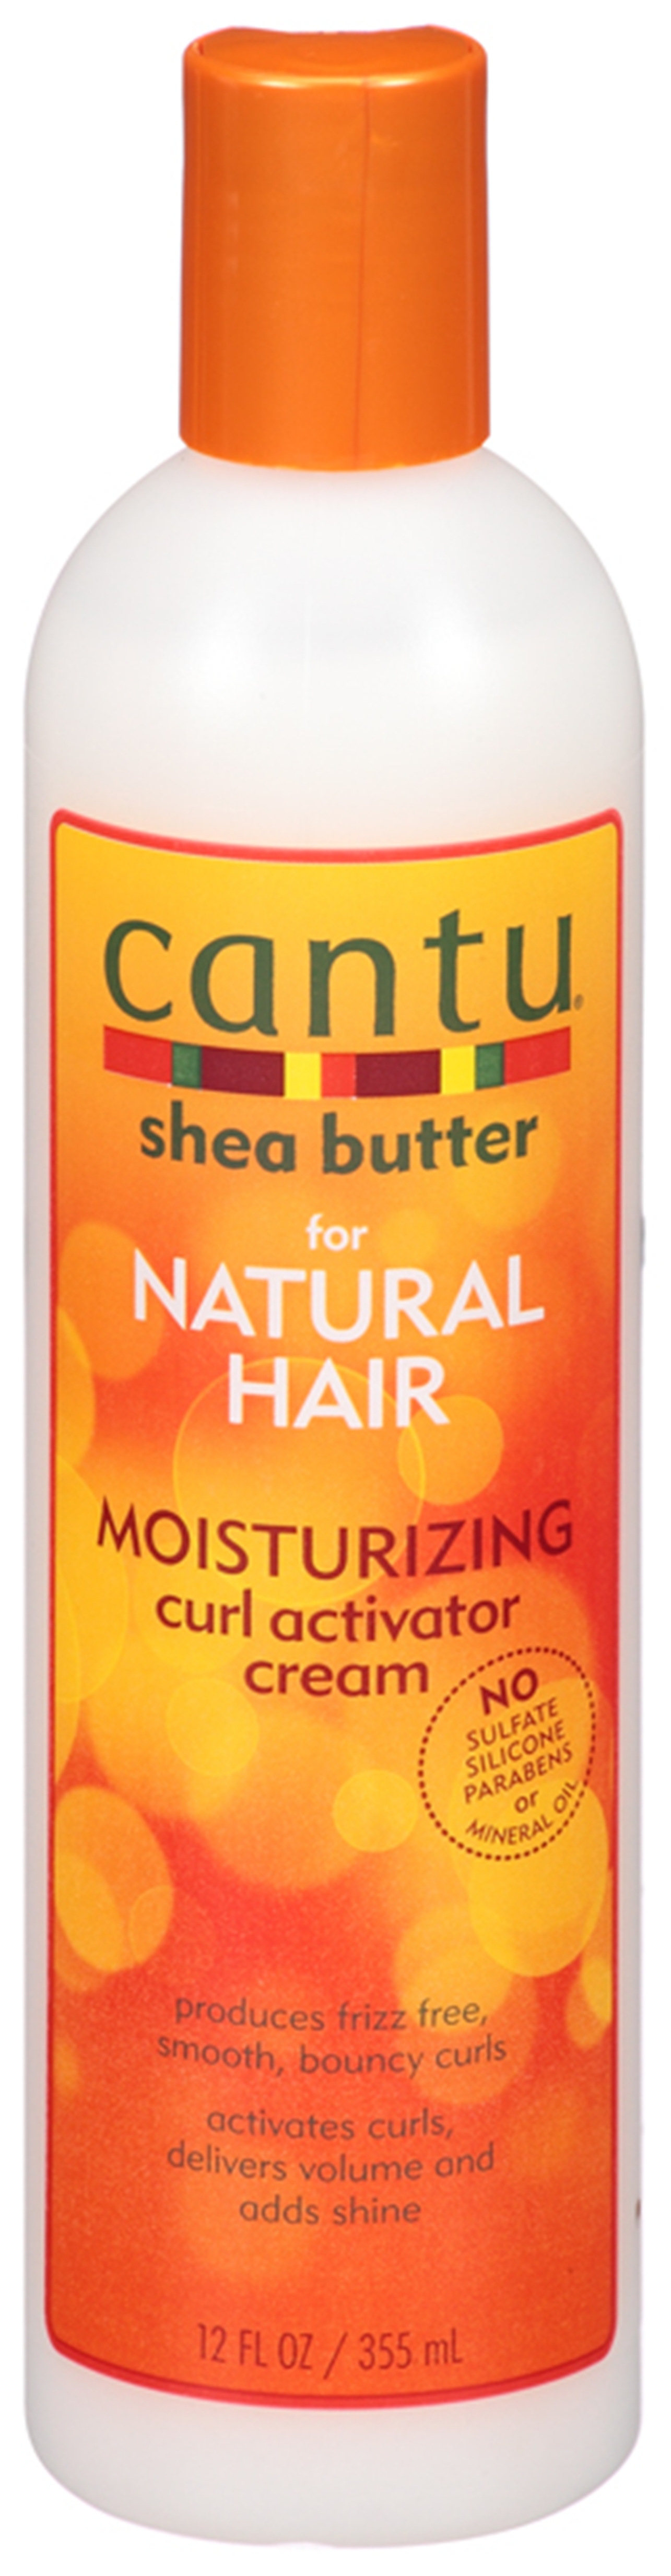 Cantu Shea Butter Shea Butter Moisturizing Curl Activator Cream, 12 oz.